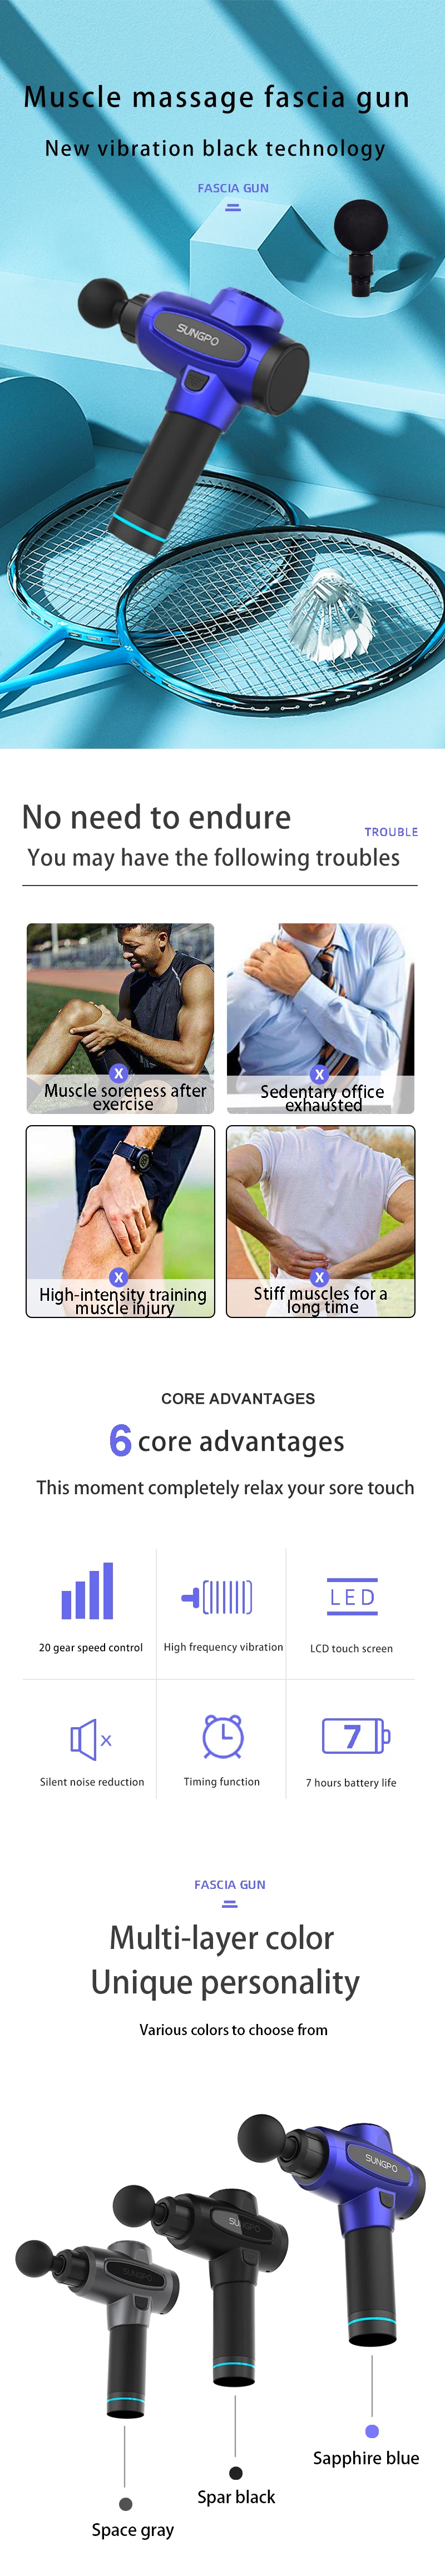 Fitness sports body massager vibration muscle physiotherapy massage gun